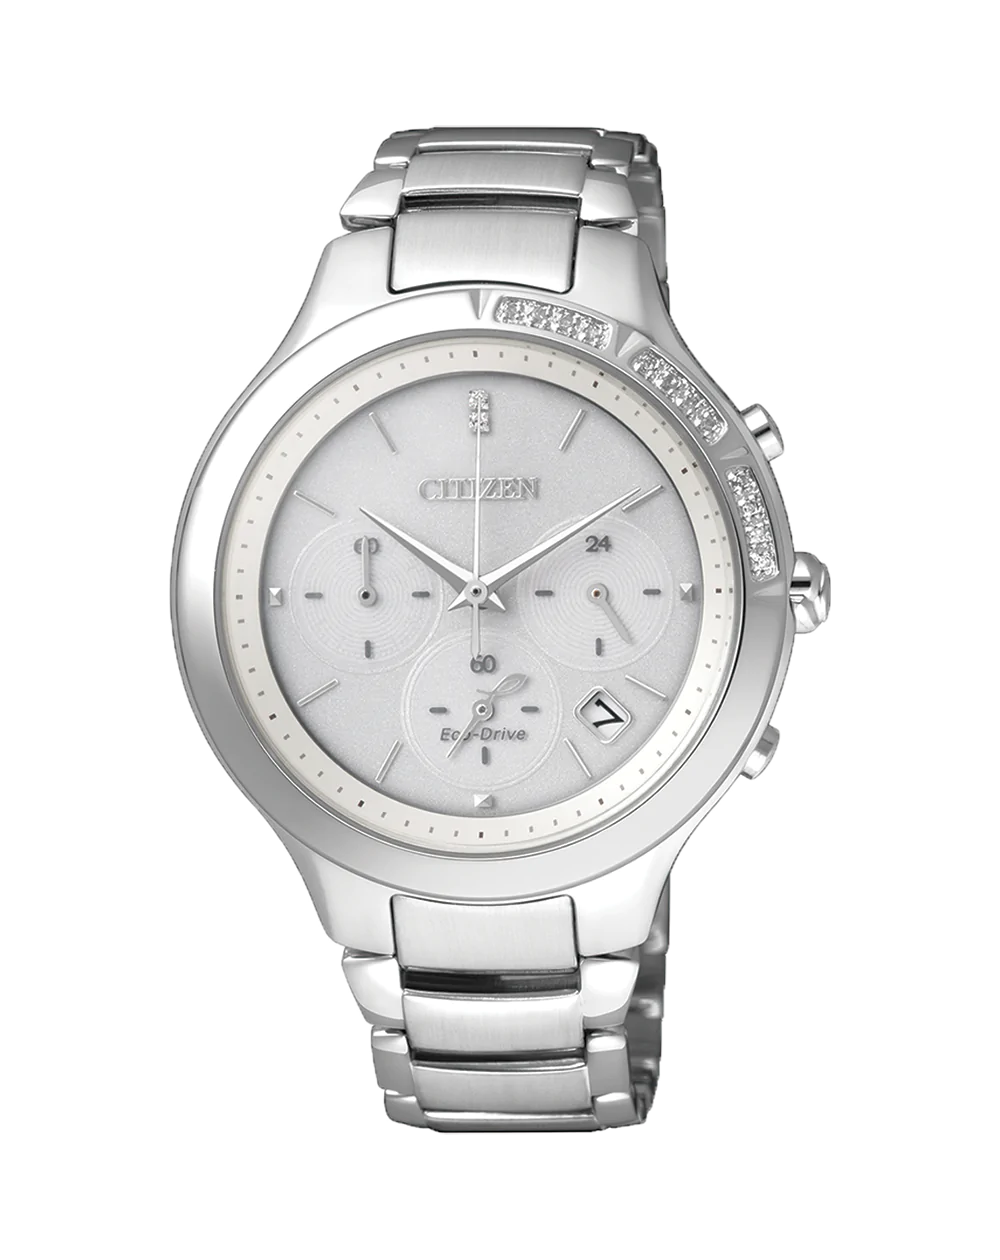 Citizen Women's Eco-Drive Diamond Watch